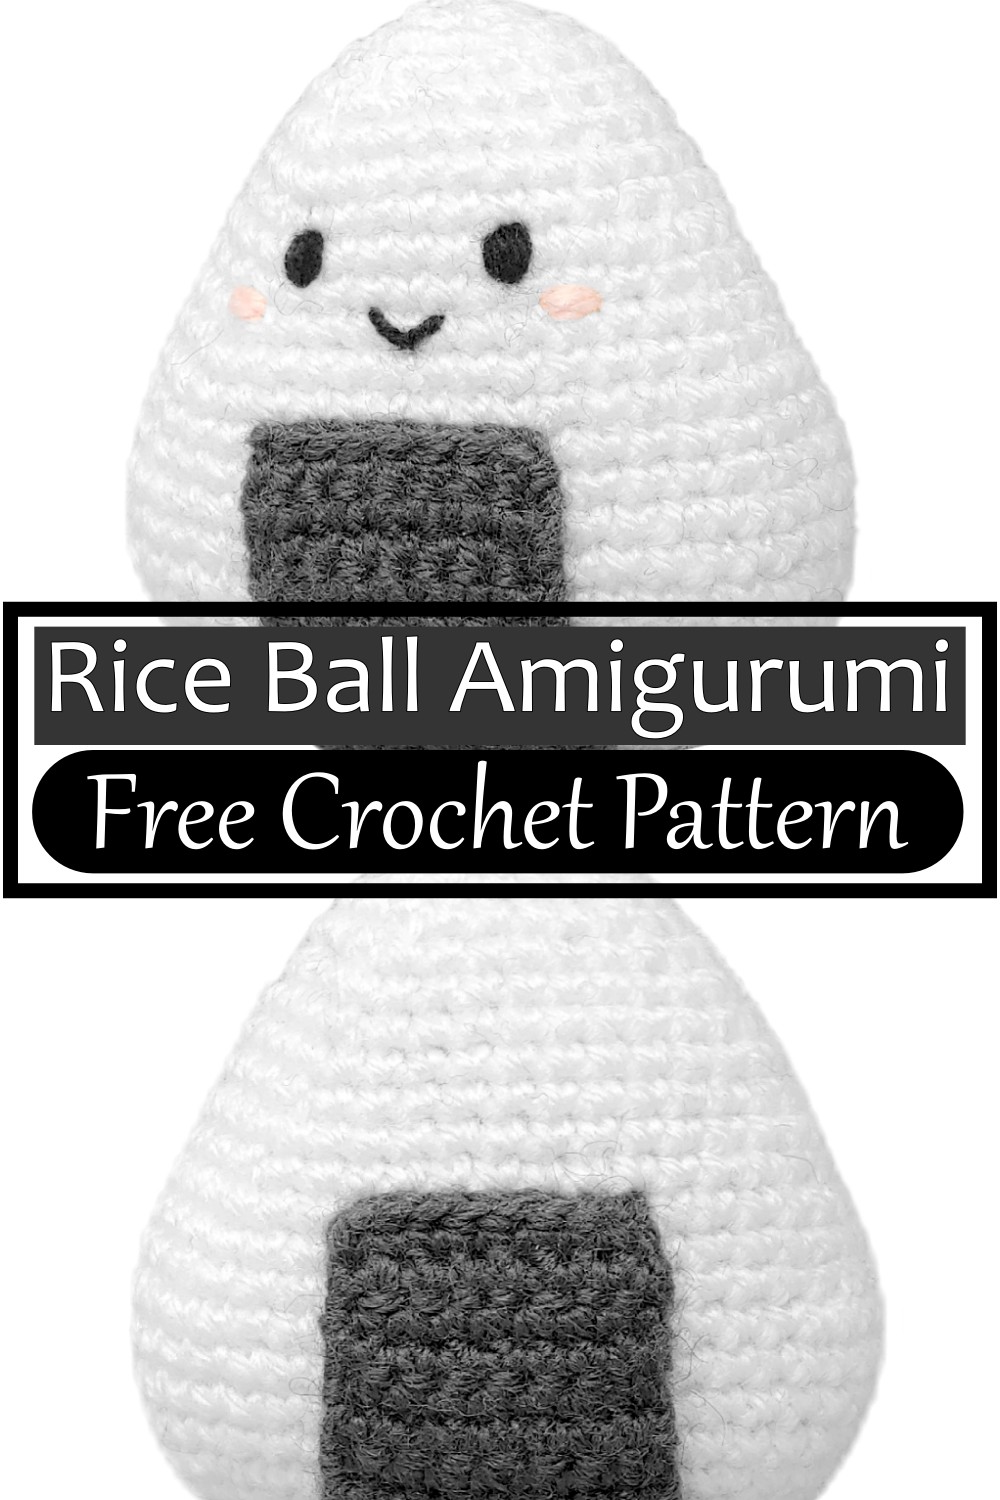 Rice Ball Amigurumi